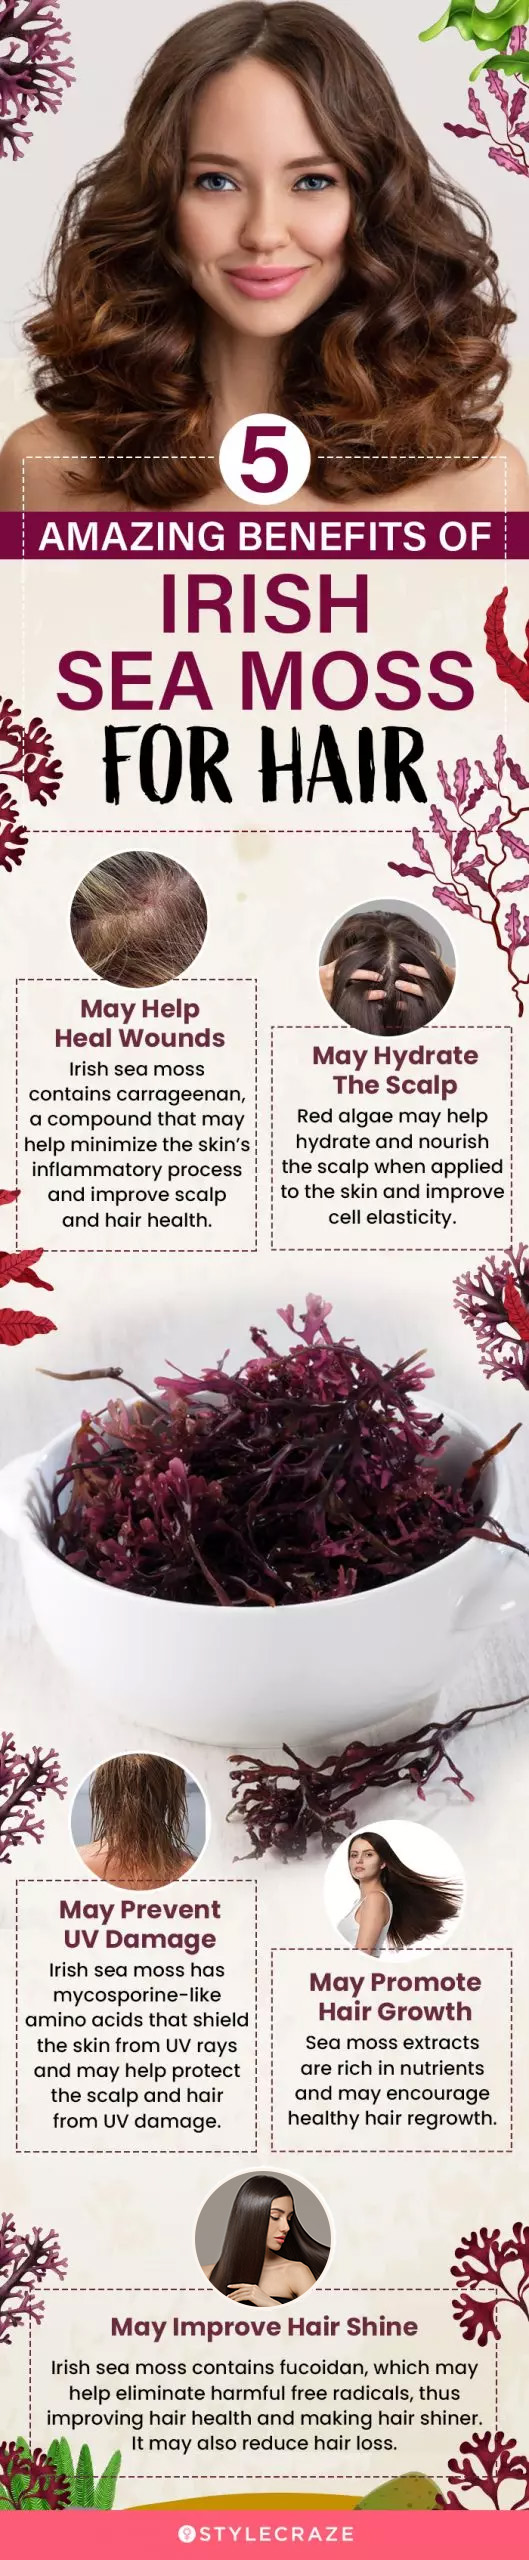 5 amazing benefits of irish sea moss for hair (infographic)